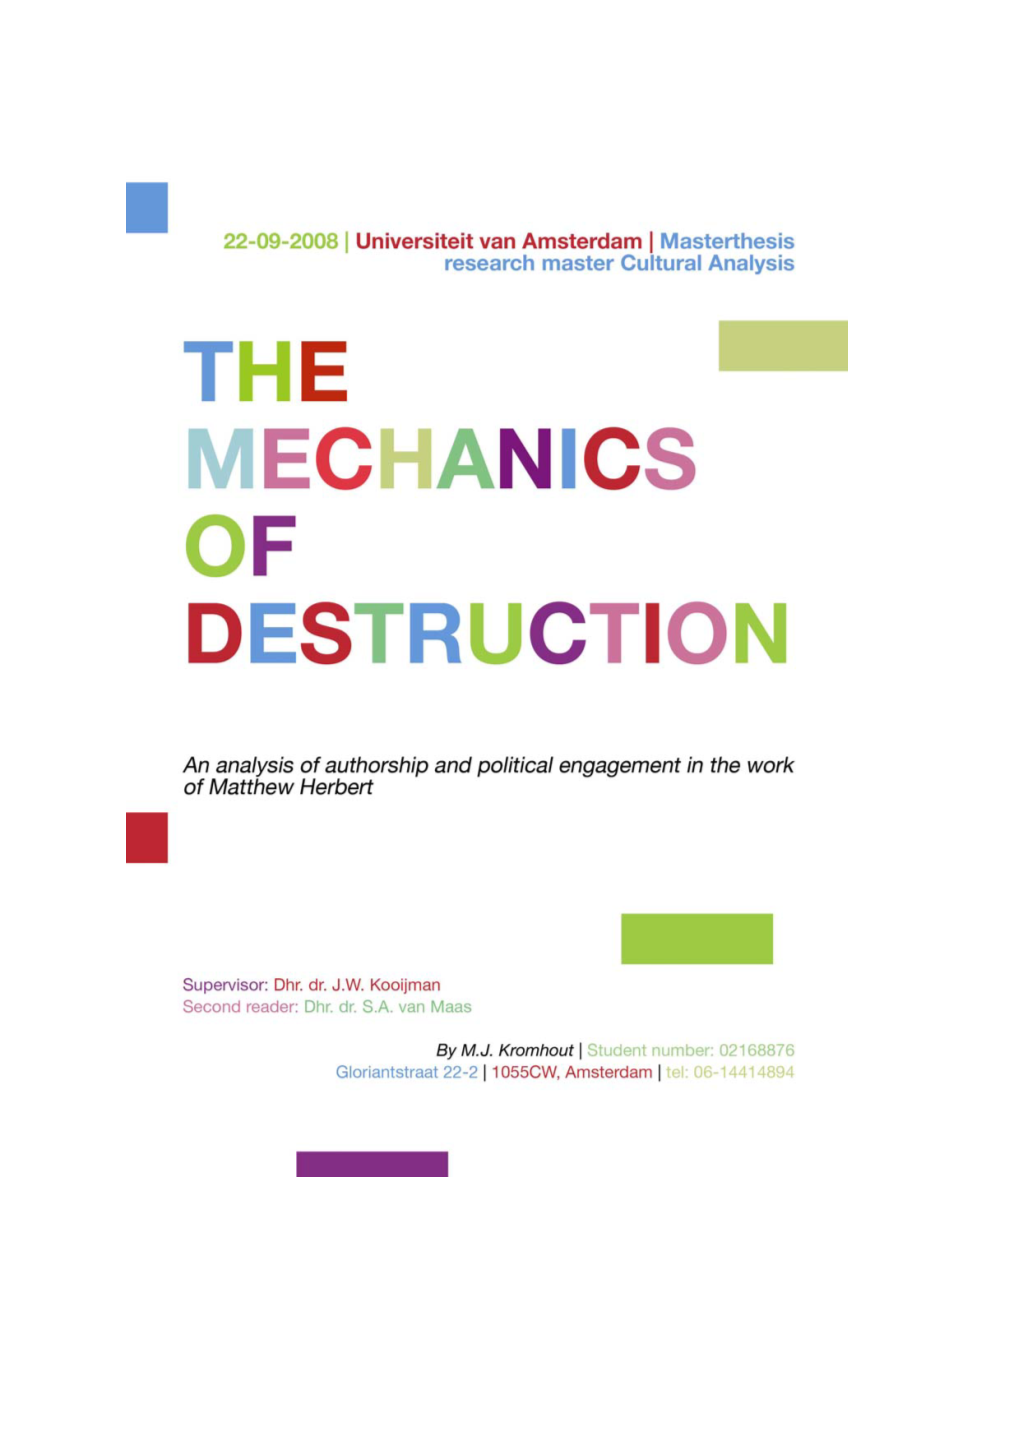 The Mechanics of Destruction1